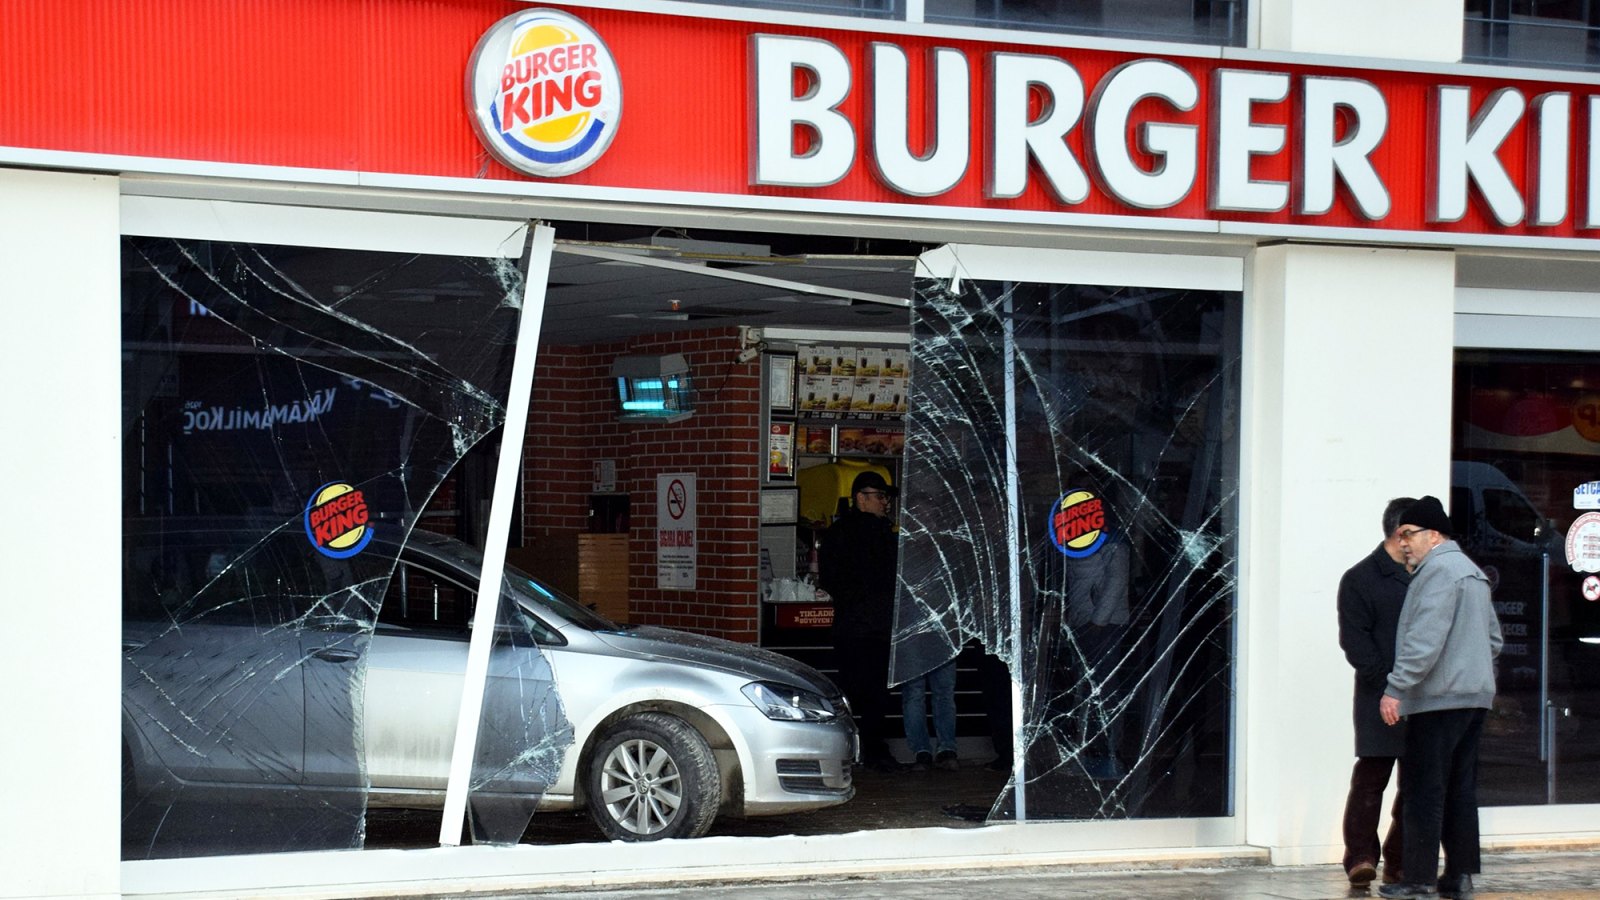 Burger king door dash ad